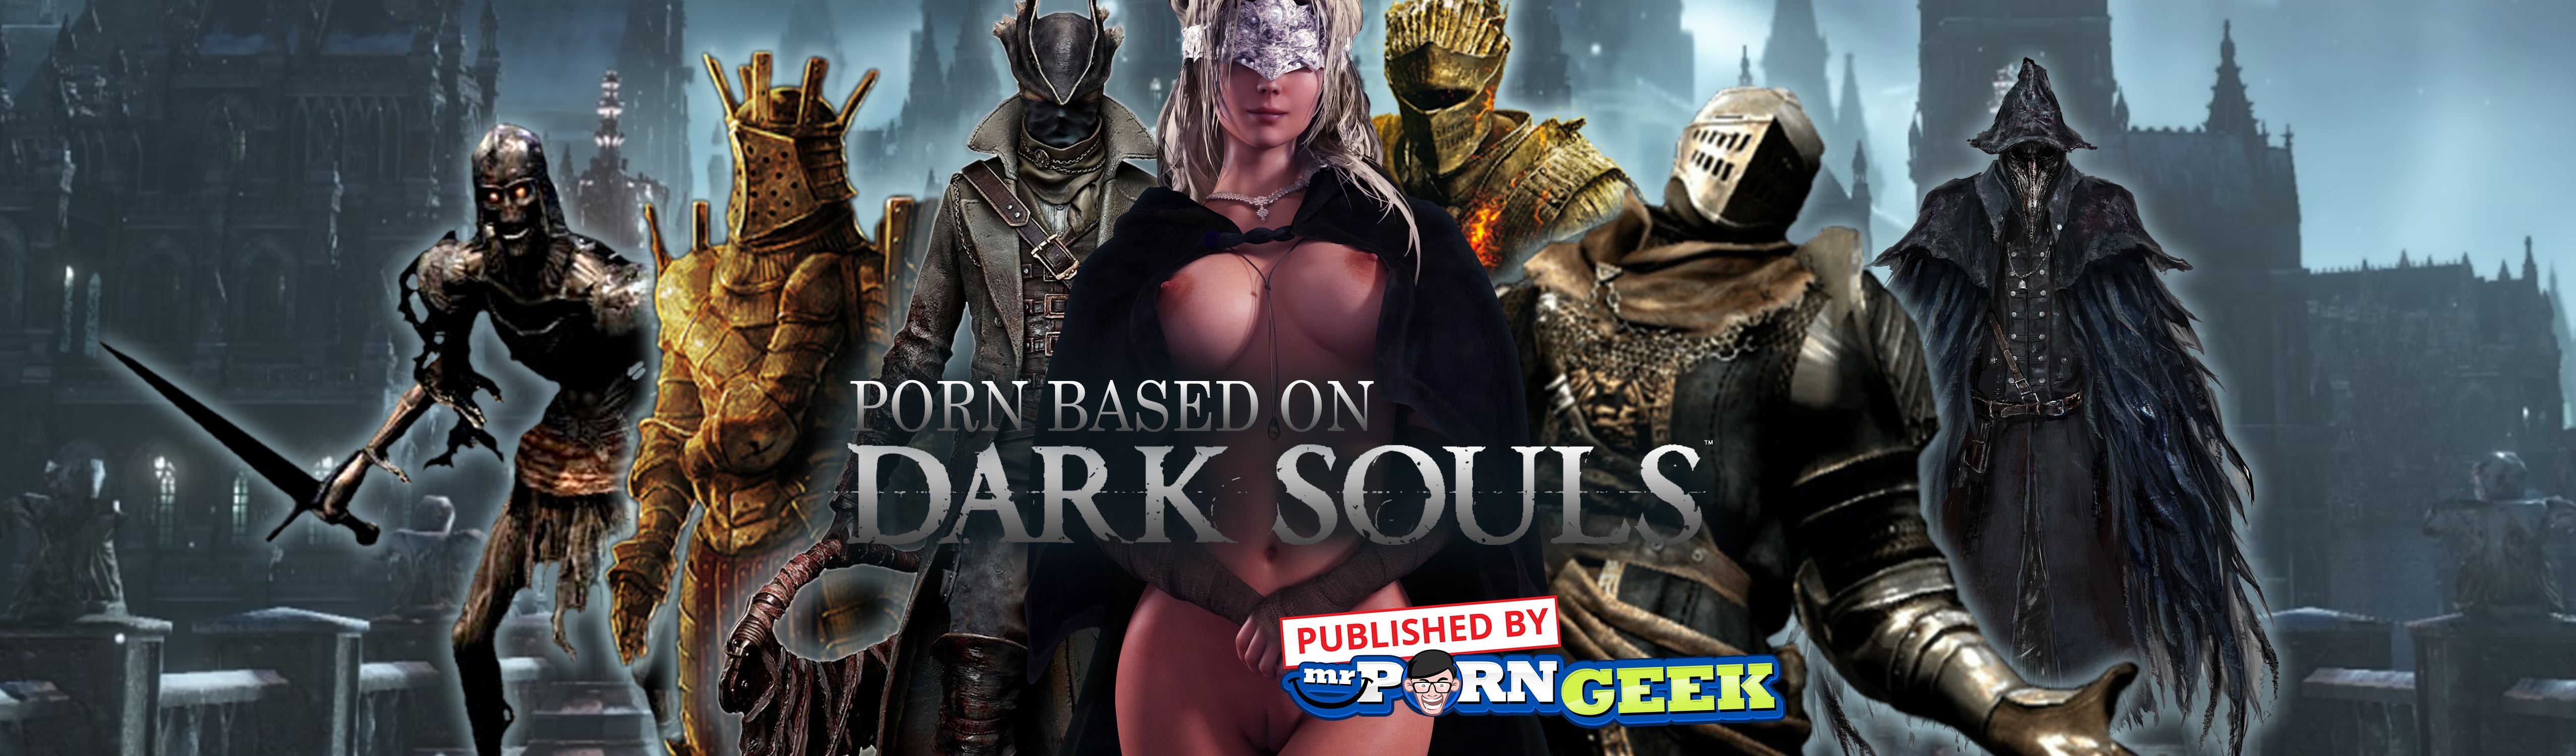 Dark Souls Porn - Porn Based On The Dark Souls Games - MrPornGeek's Blog